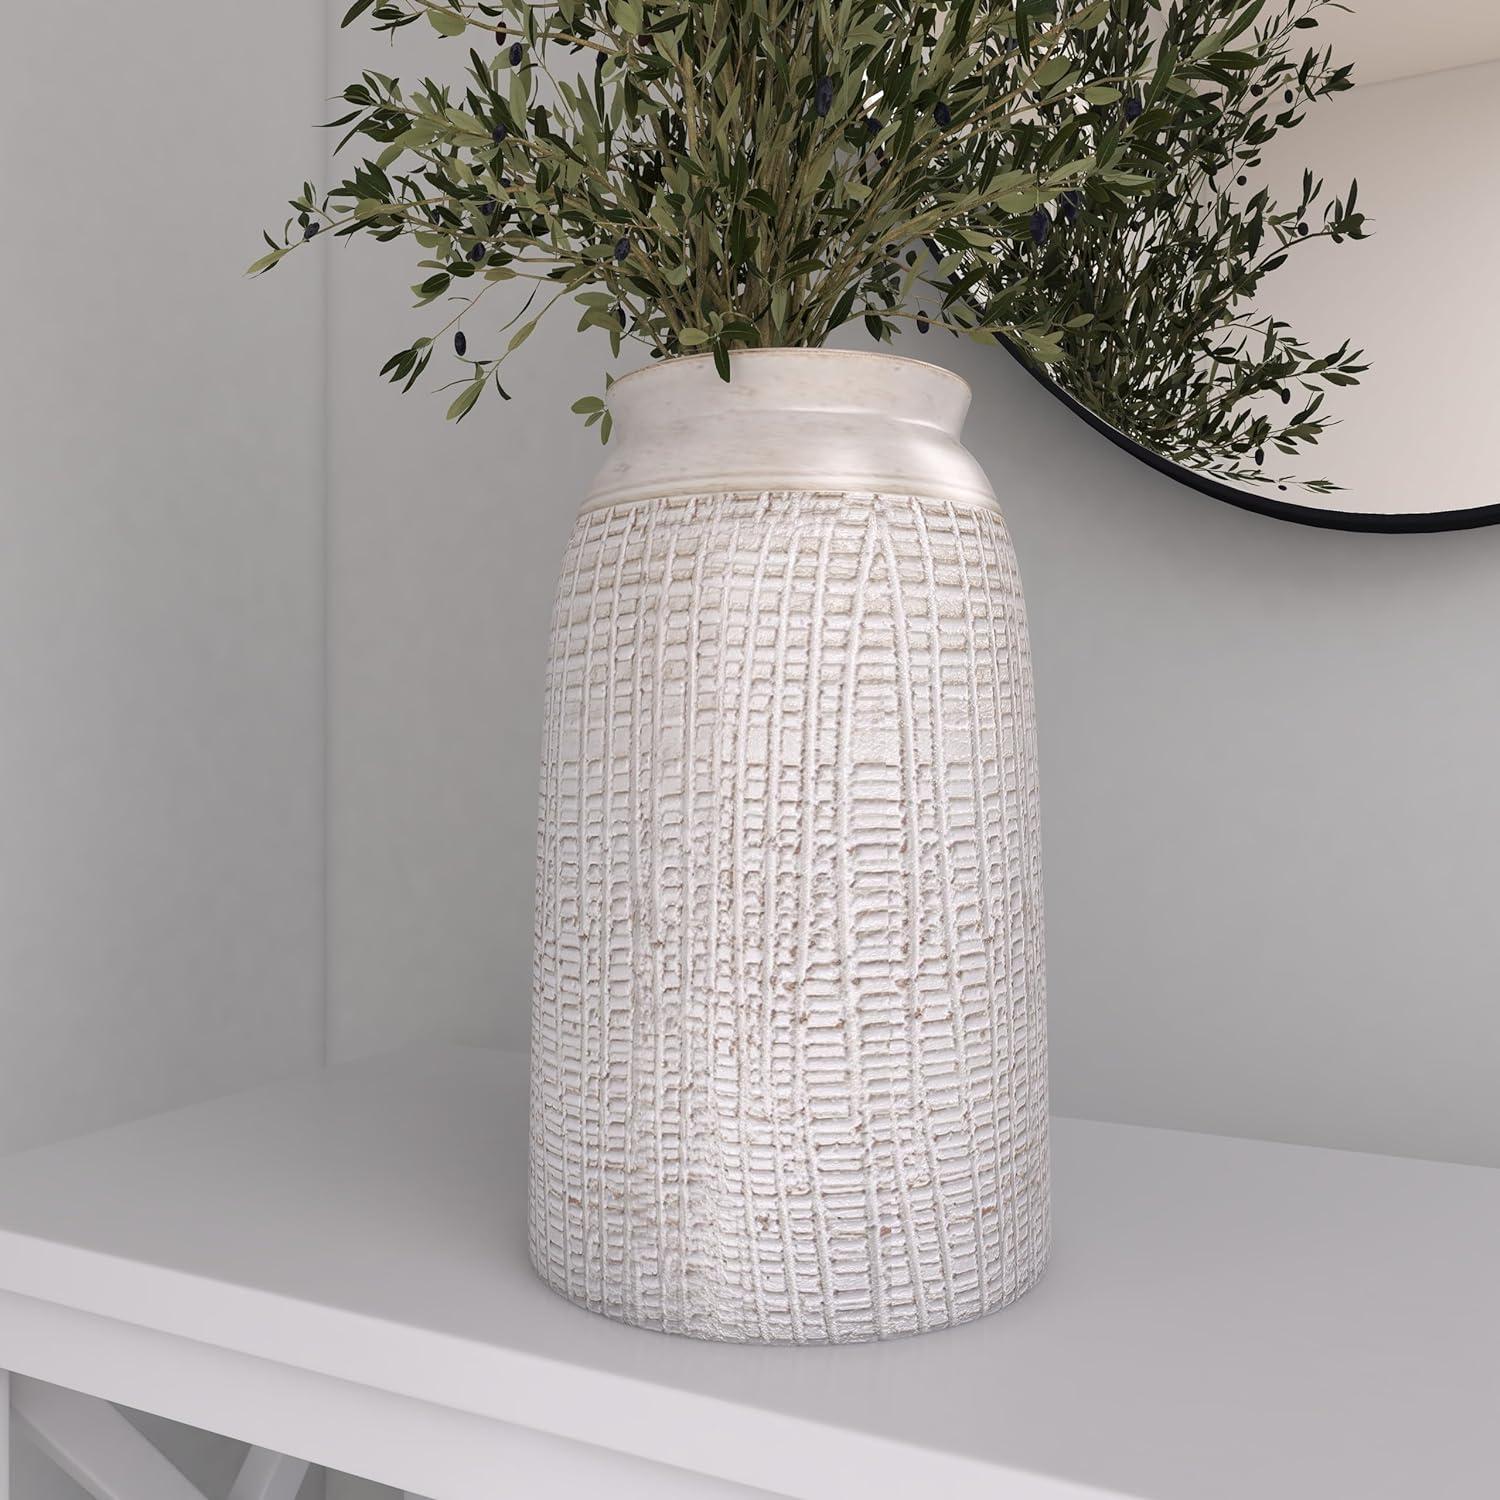 Elegant White Ceramic Bouquet Vase with Crosshatch Texture - 10.75" High